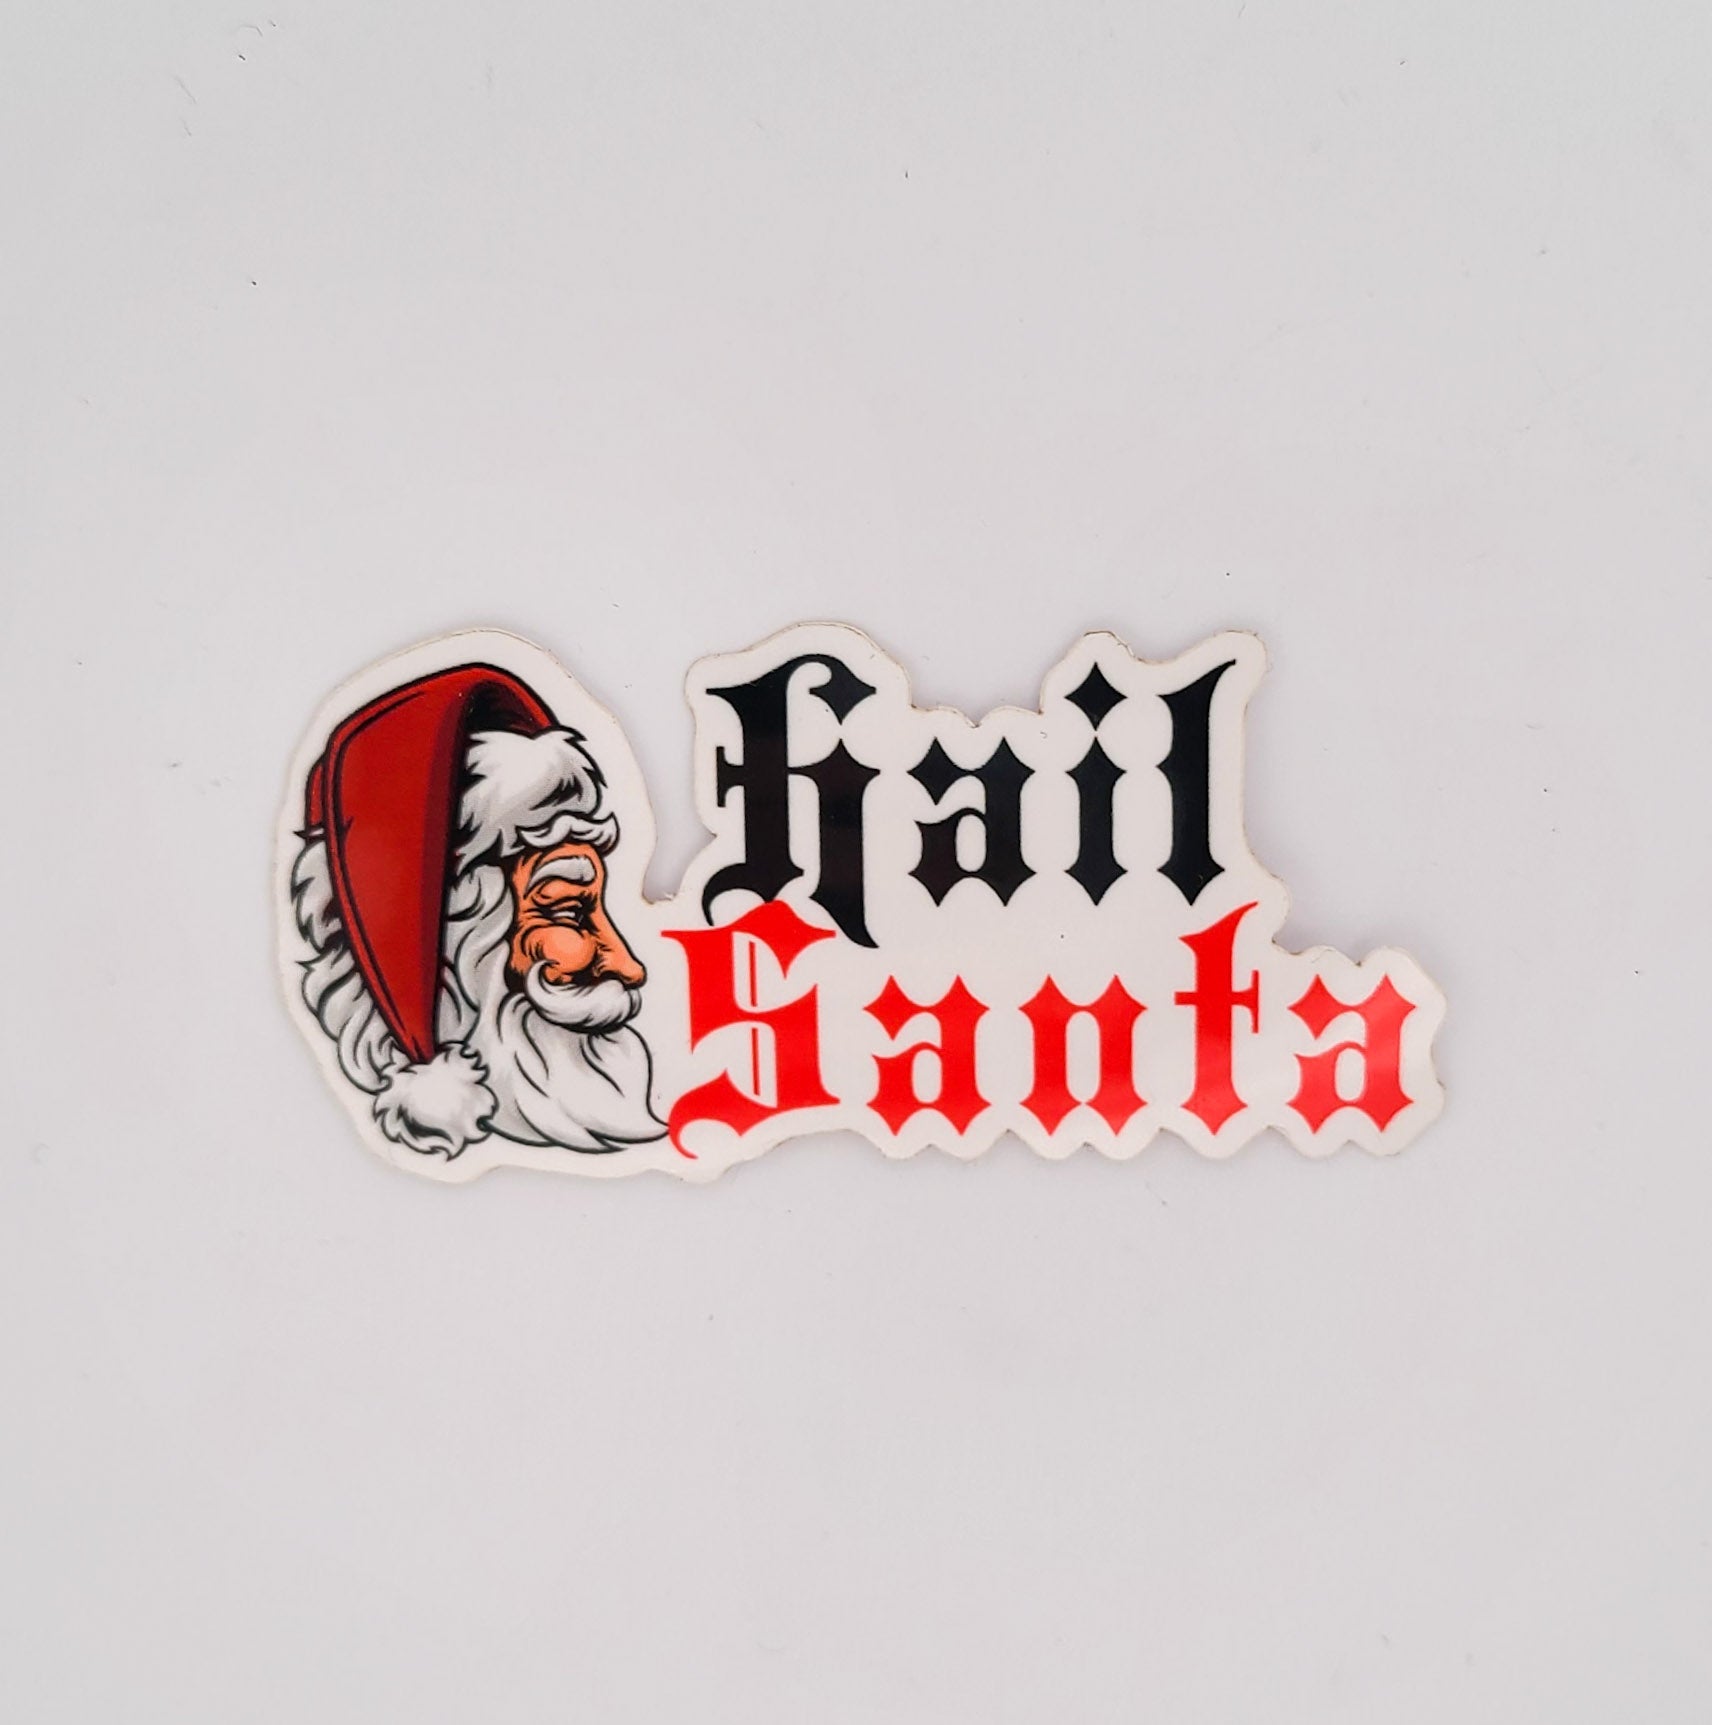 Hail Santa Holiday Sticker